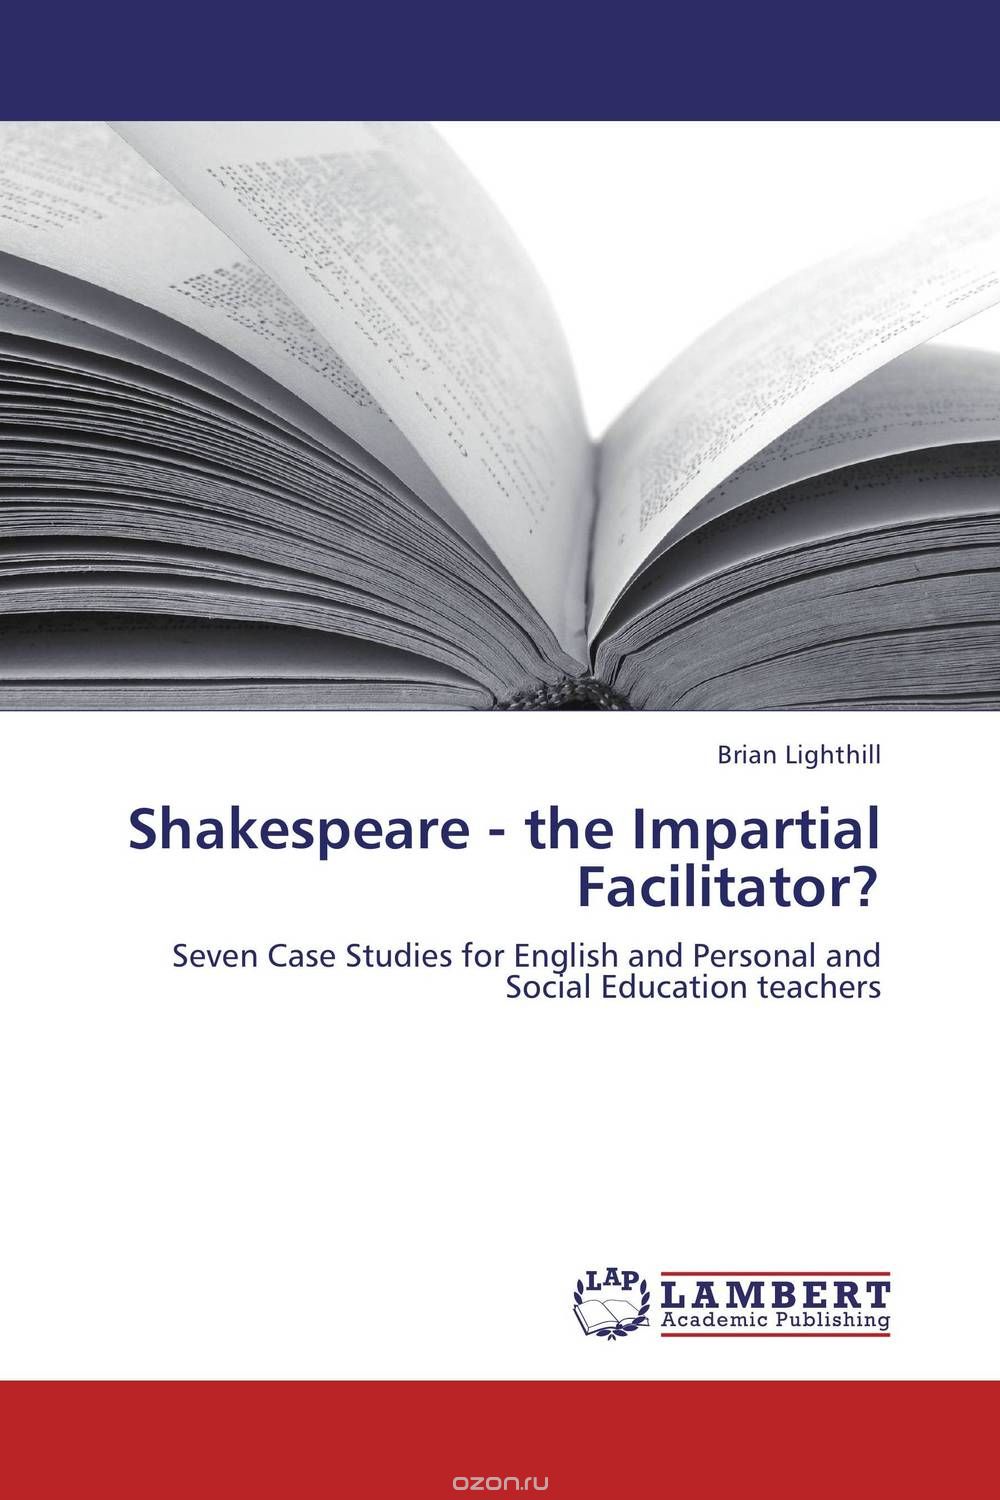 Shakespeare - the Impartial Facilitator?